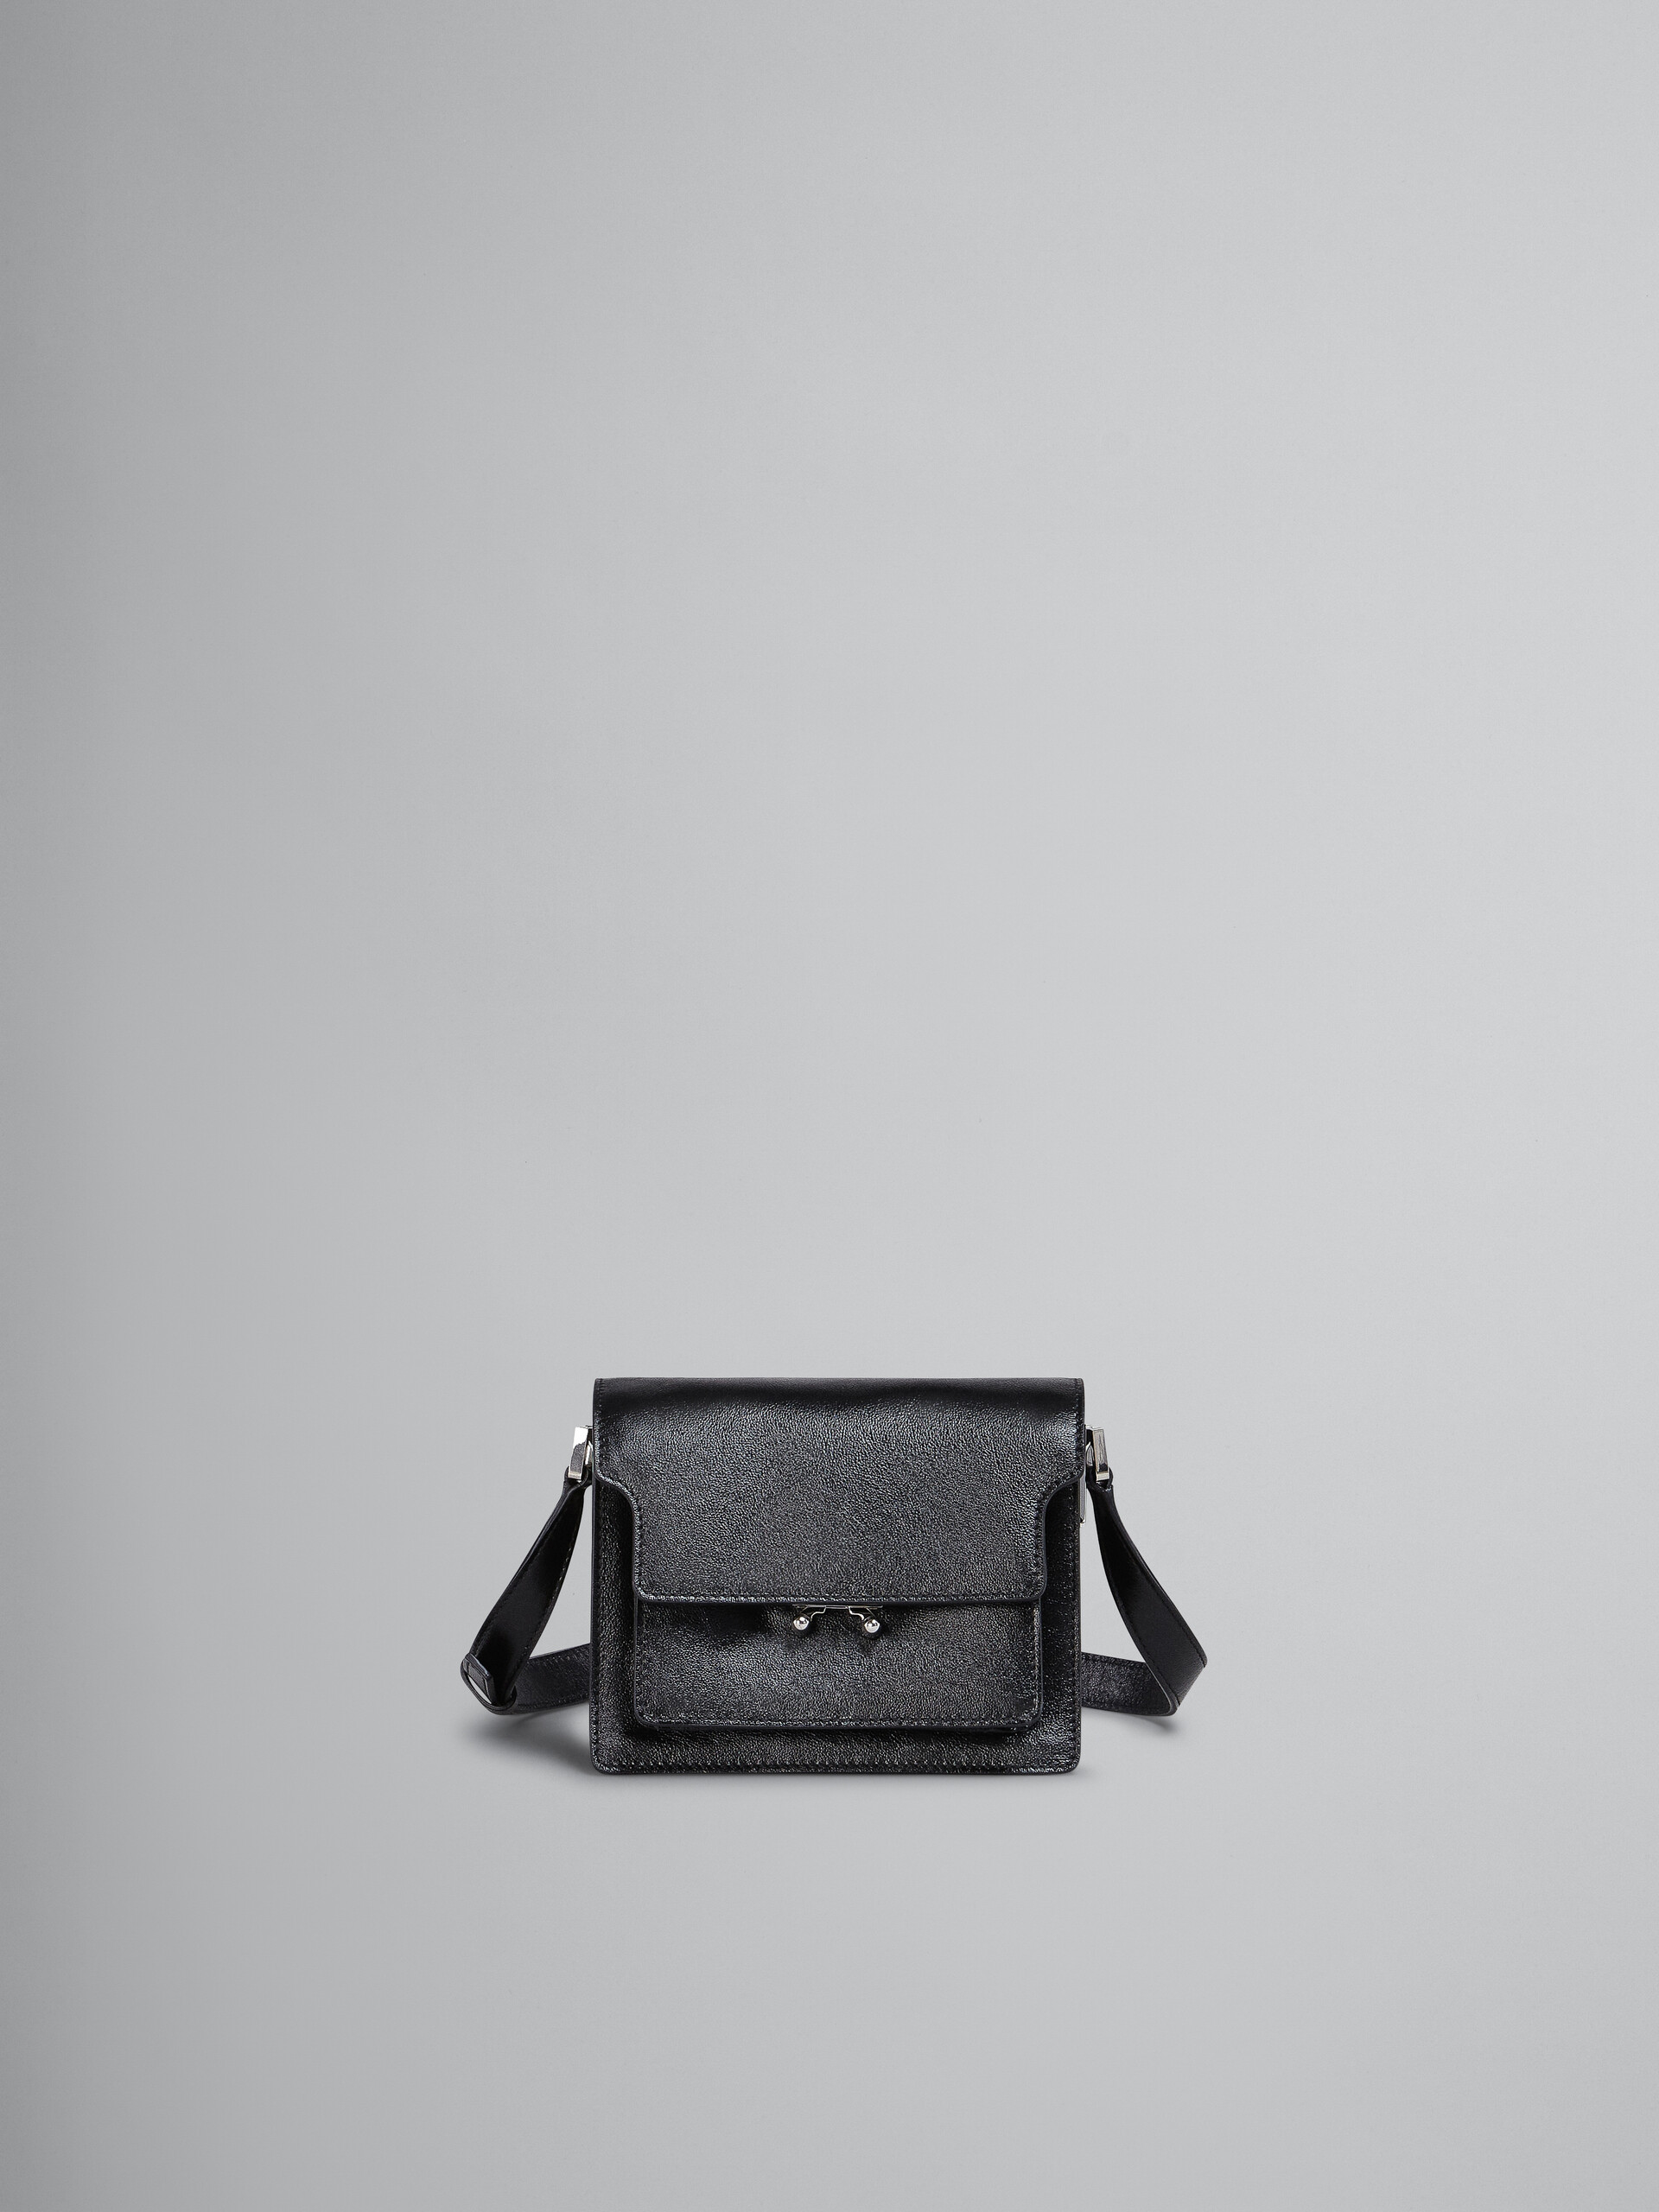 Knorrig Kolonel Respectvol Trunk Soft Mini Bag in black leather | Marni